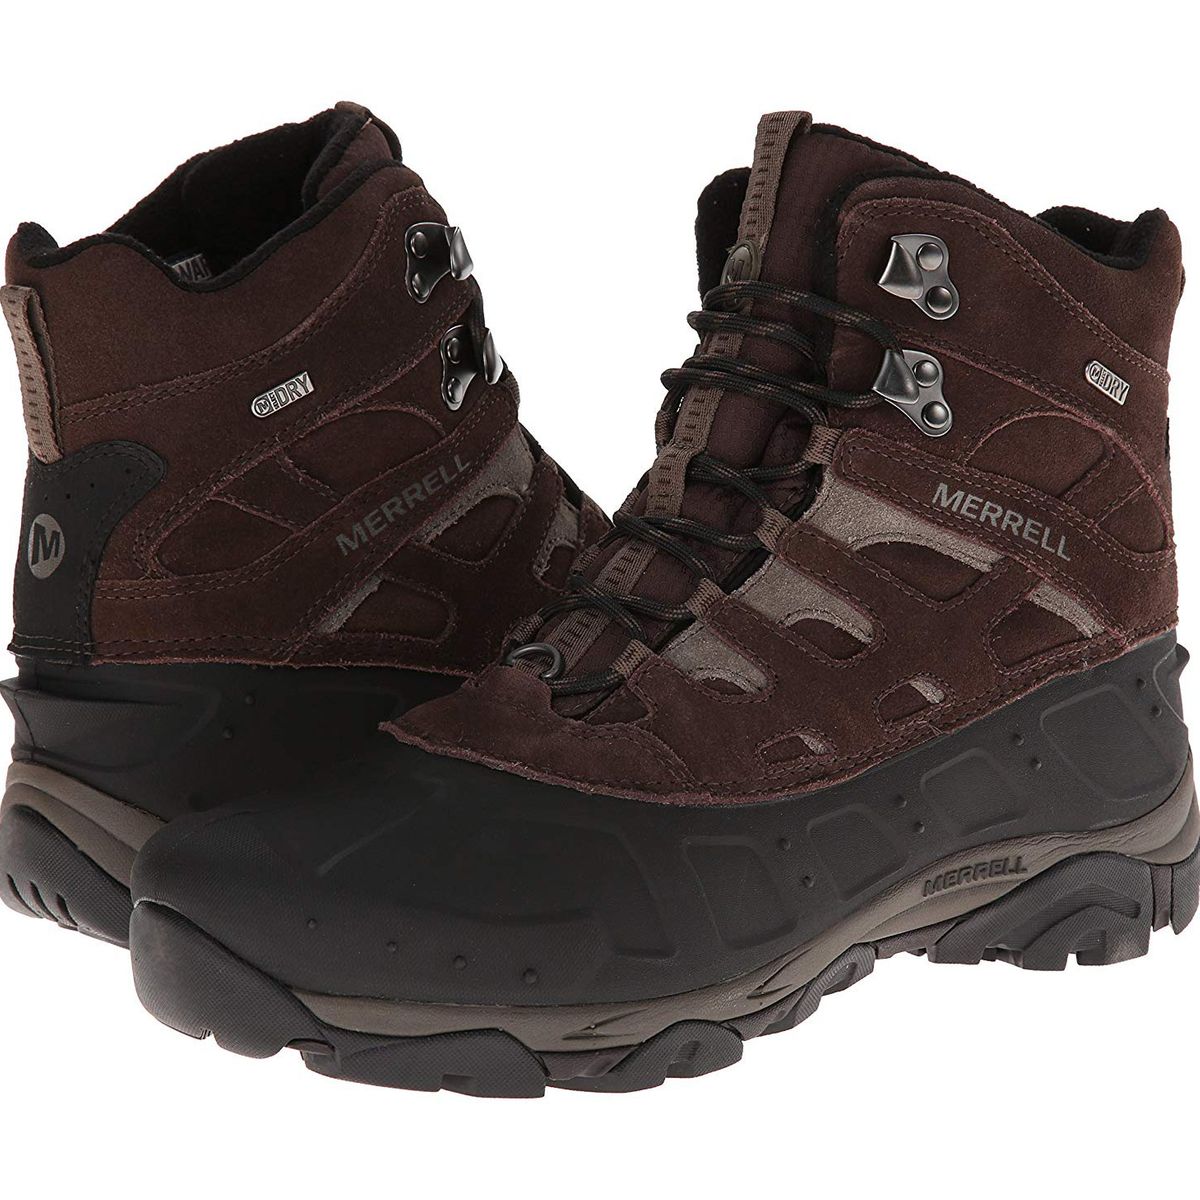 tall waterproof hiking boots